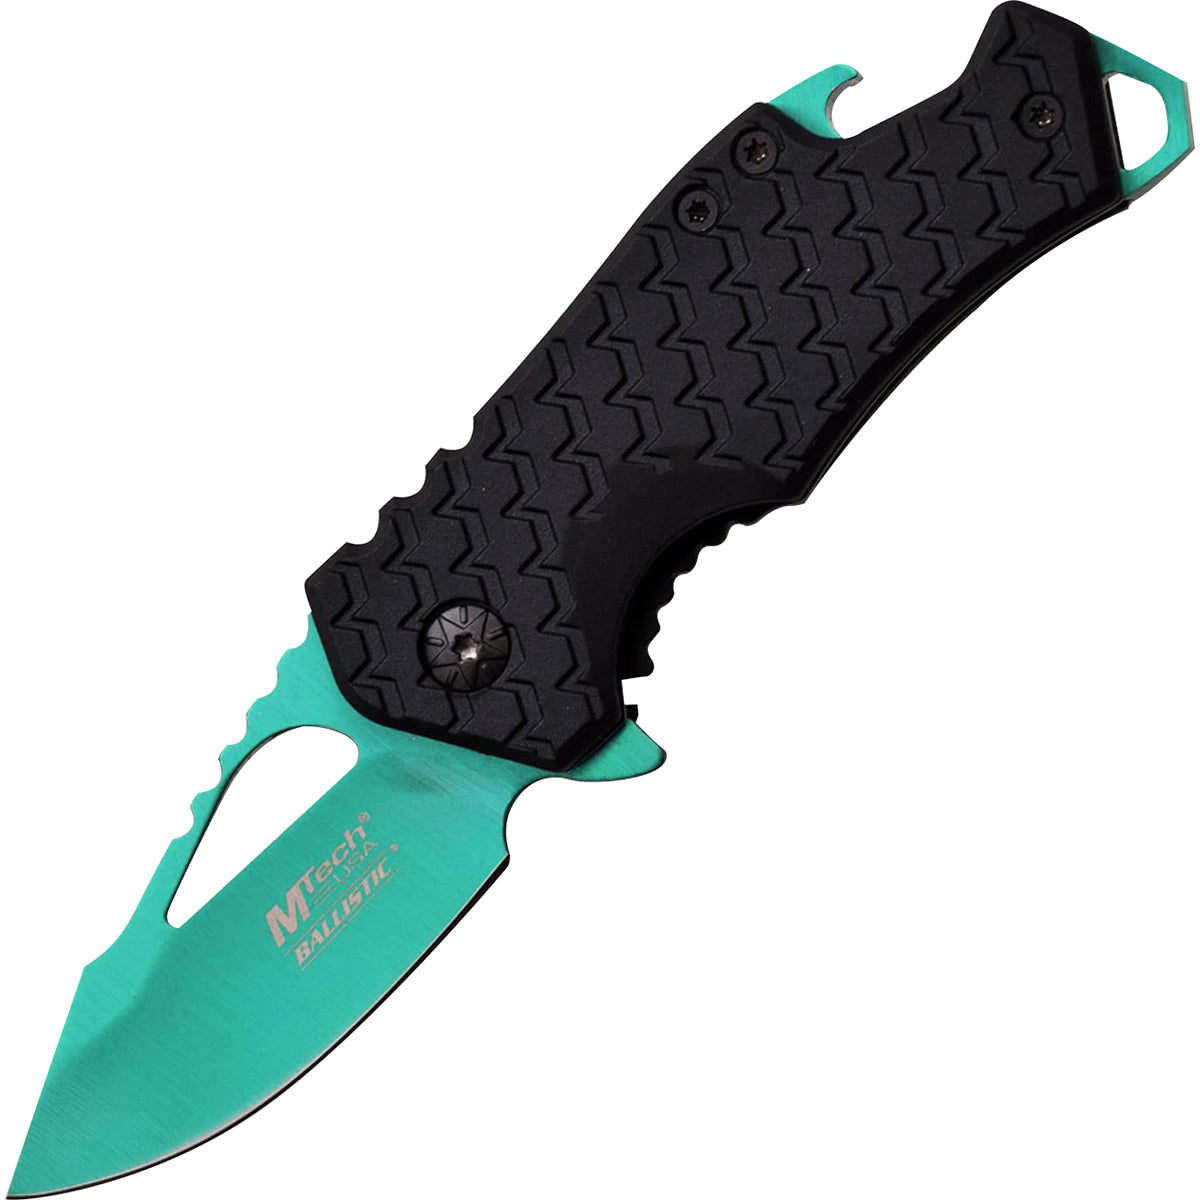 MTech USA Framelock Spring Assisted Folding Knife, 2.25" Green Blade, MT-A882GN M-Tech